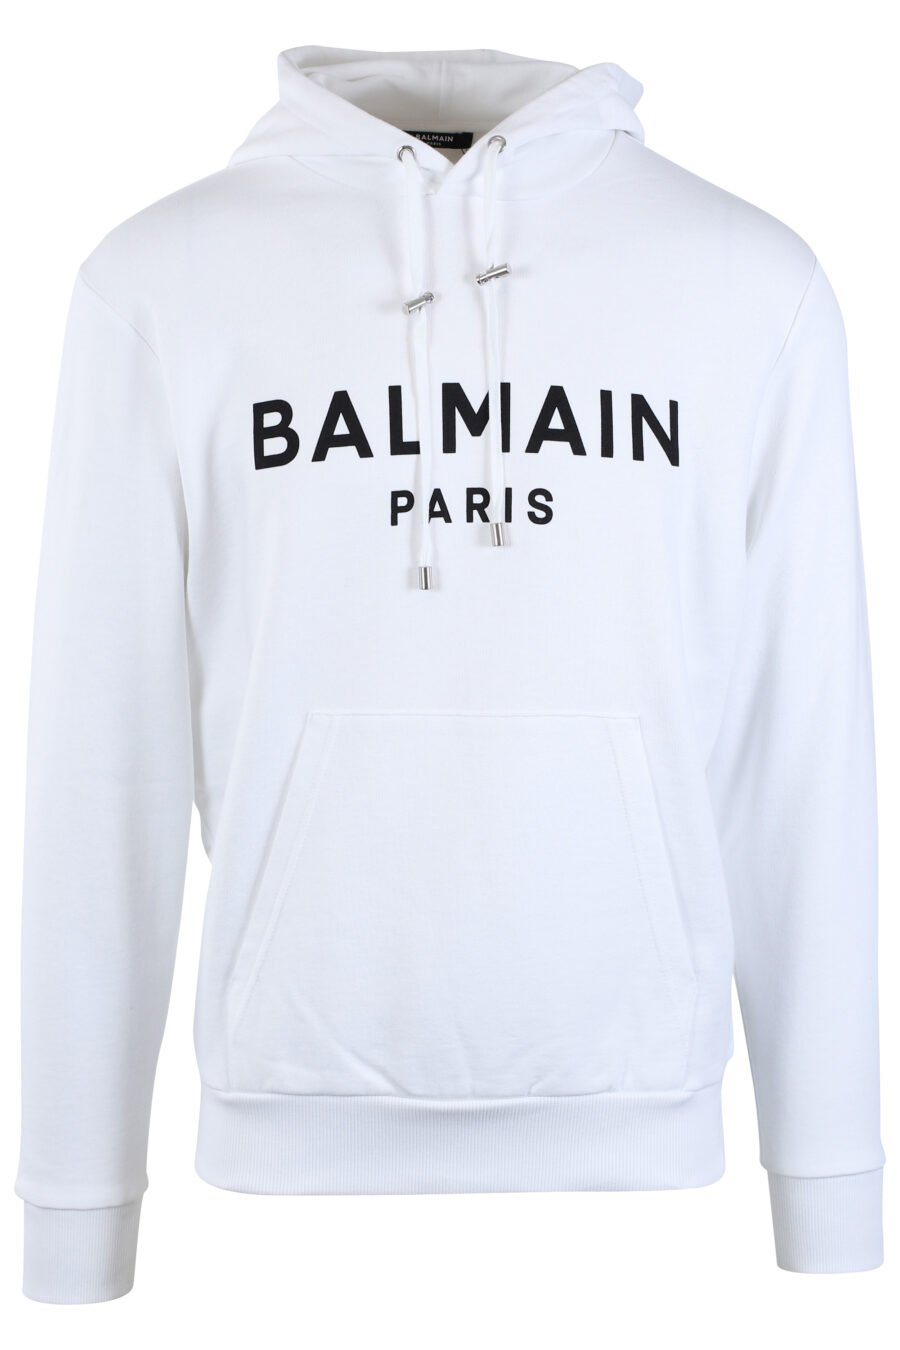 White hooded sweatshirt with black "paris" maxilogue - IMG 2605